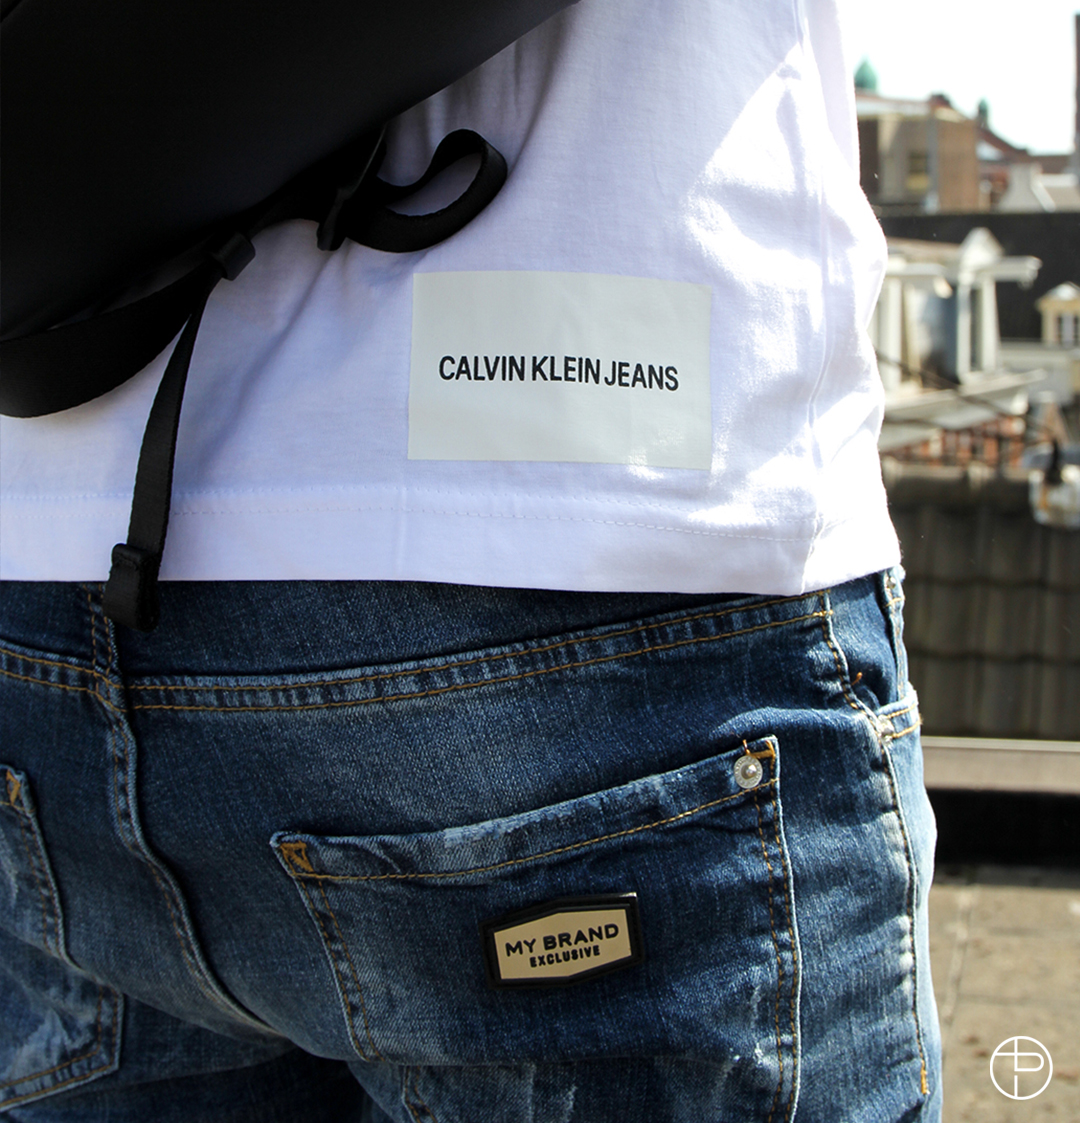 Calvin Klein shirt + My Brand jeans